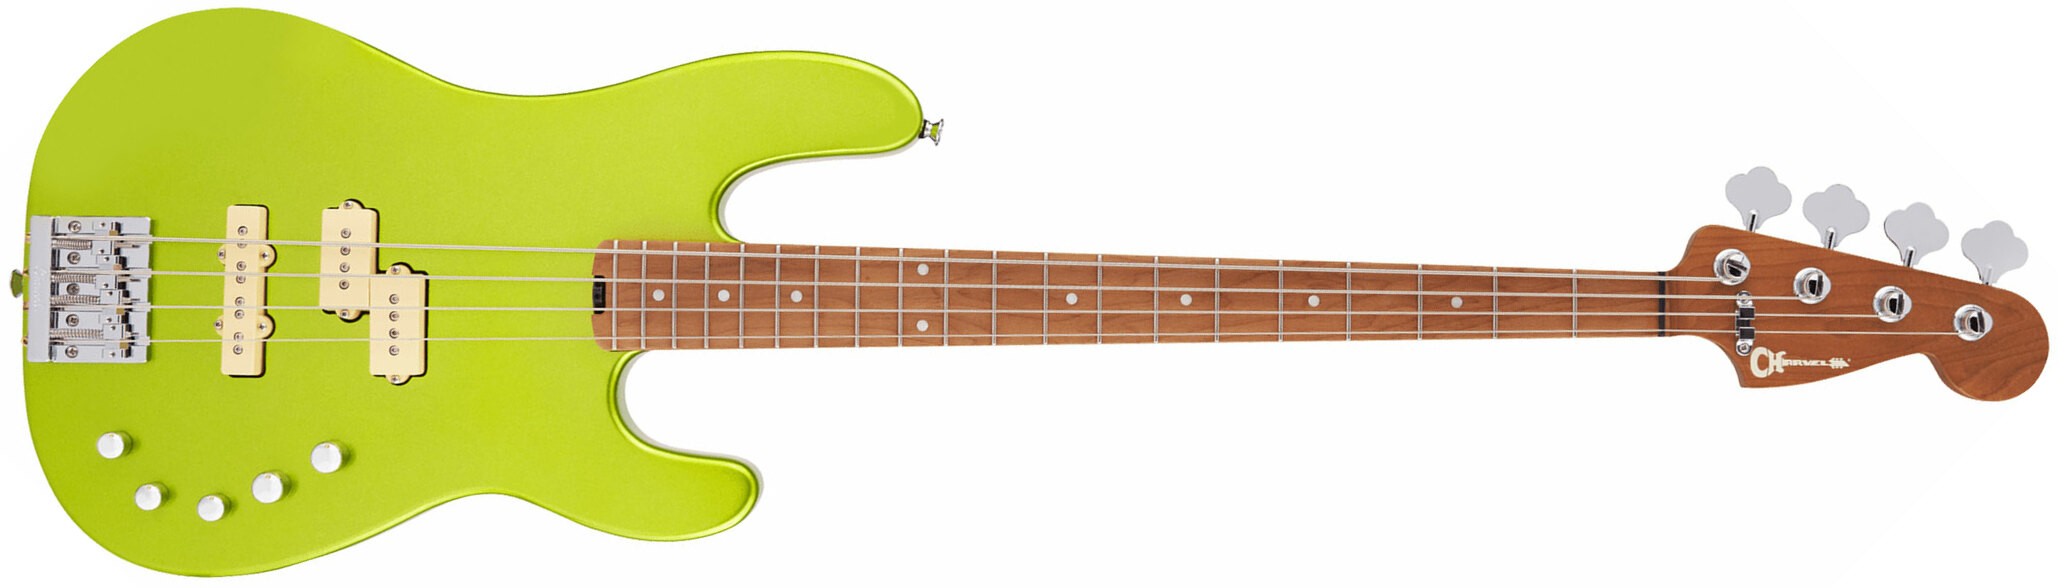 Charvel San Dimas Bass Pj Iv Pro-mod Mex 4c Active Mn - Lime Green Metallic - Bajo eléctrico de cuerpo sólido - Main picture